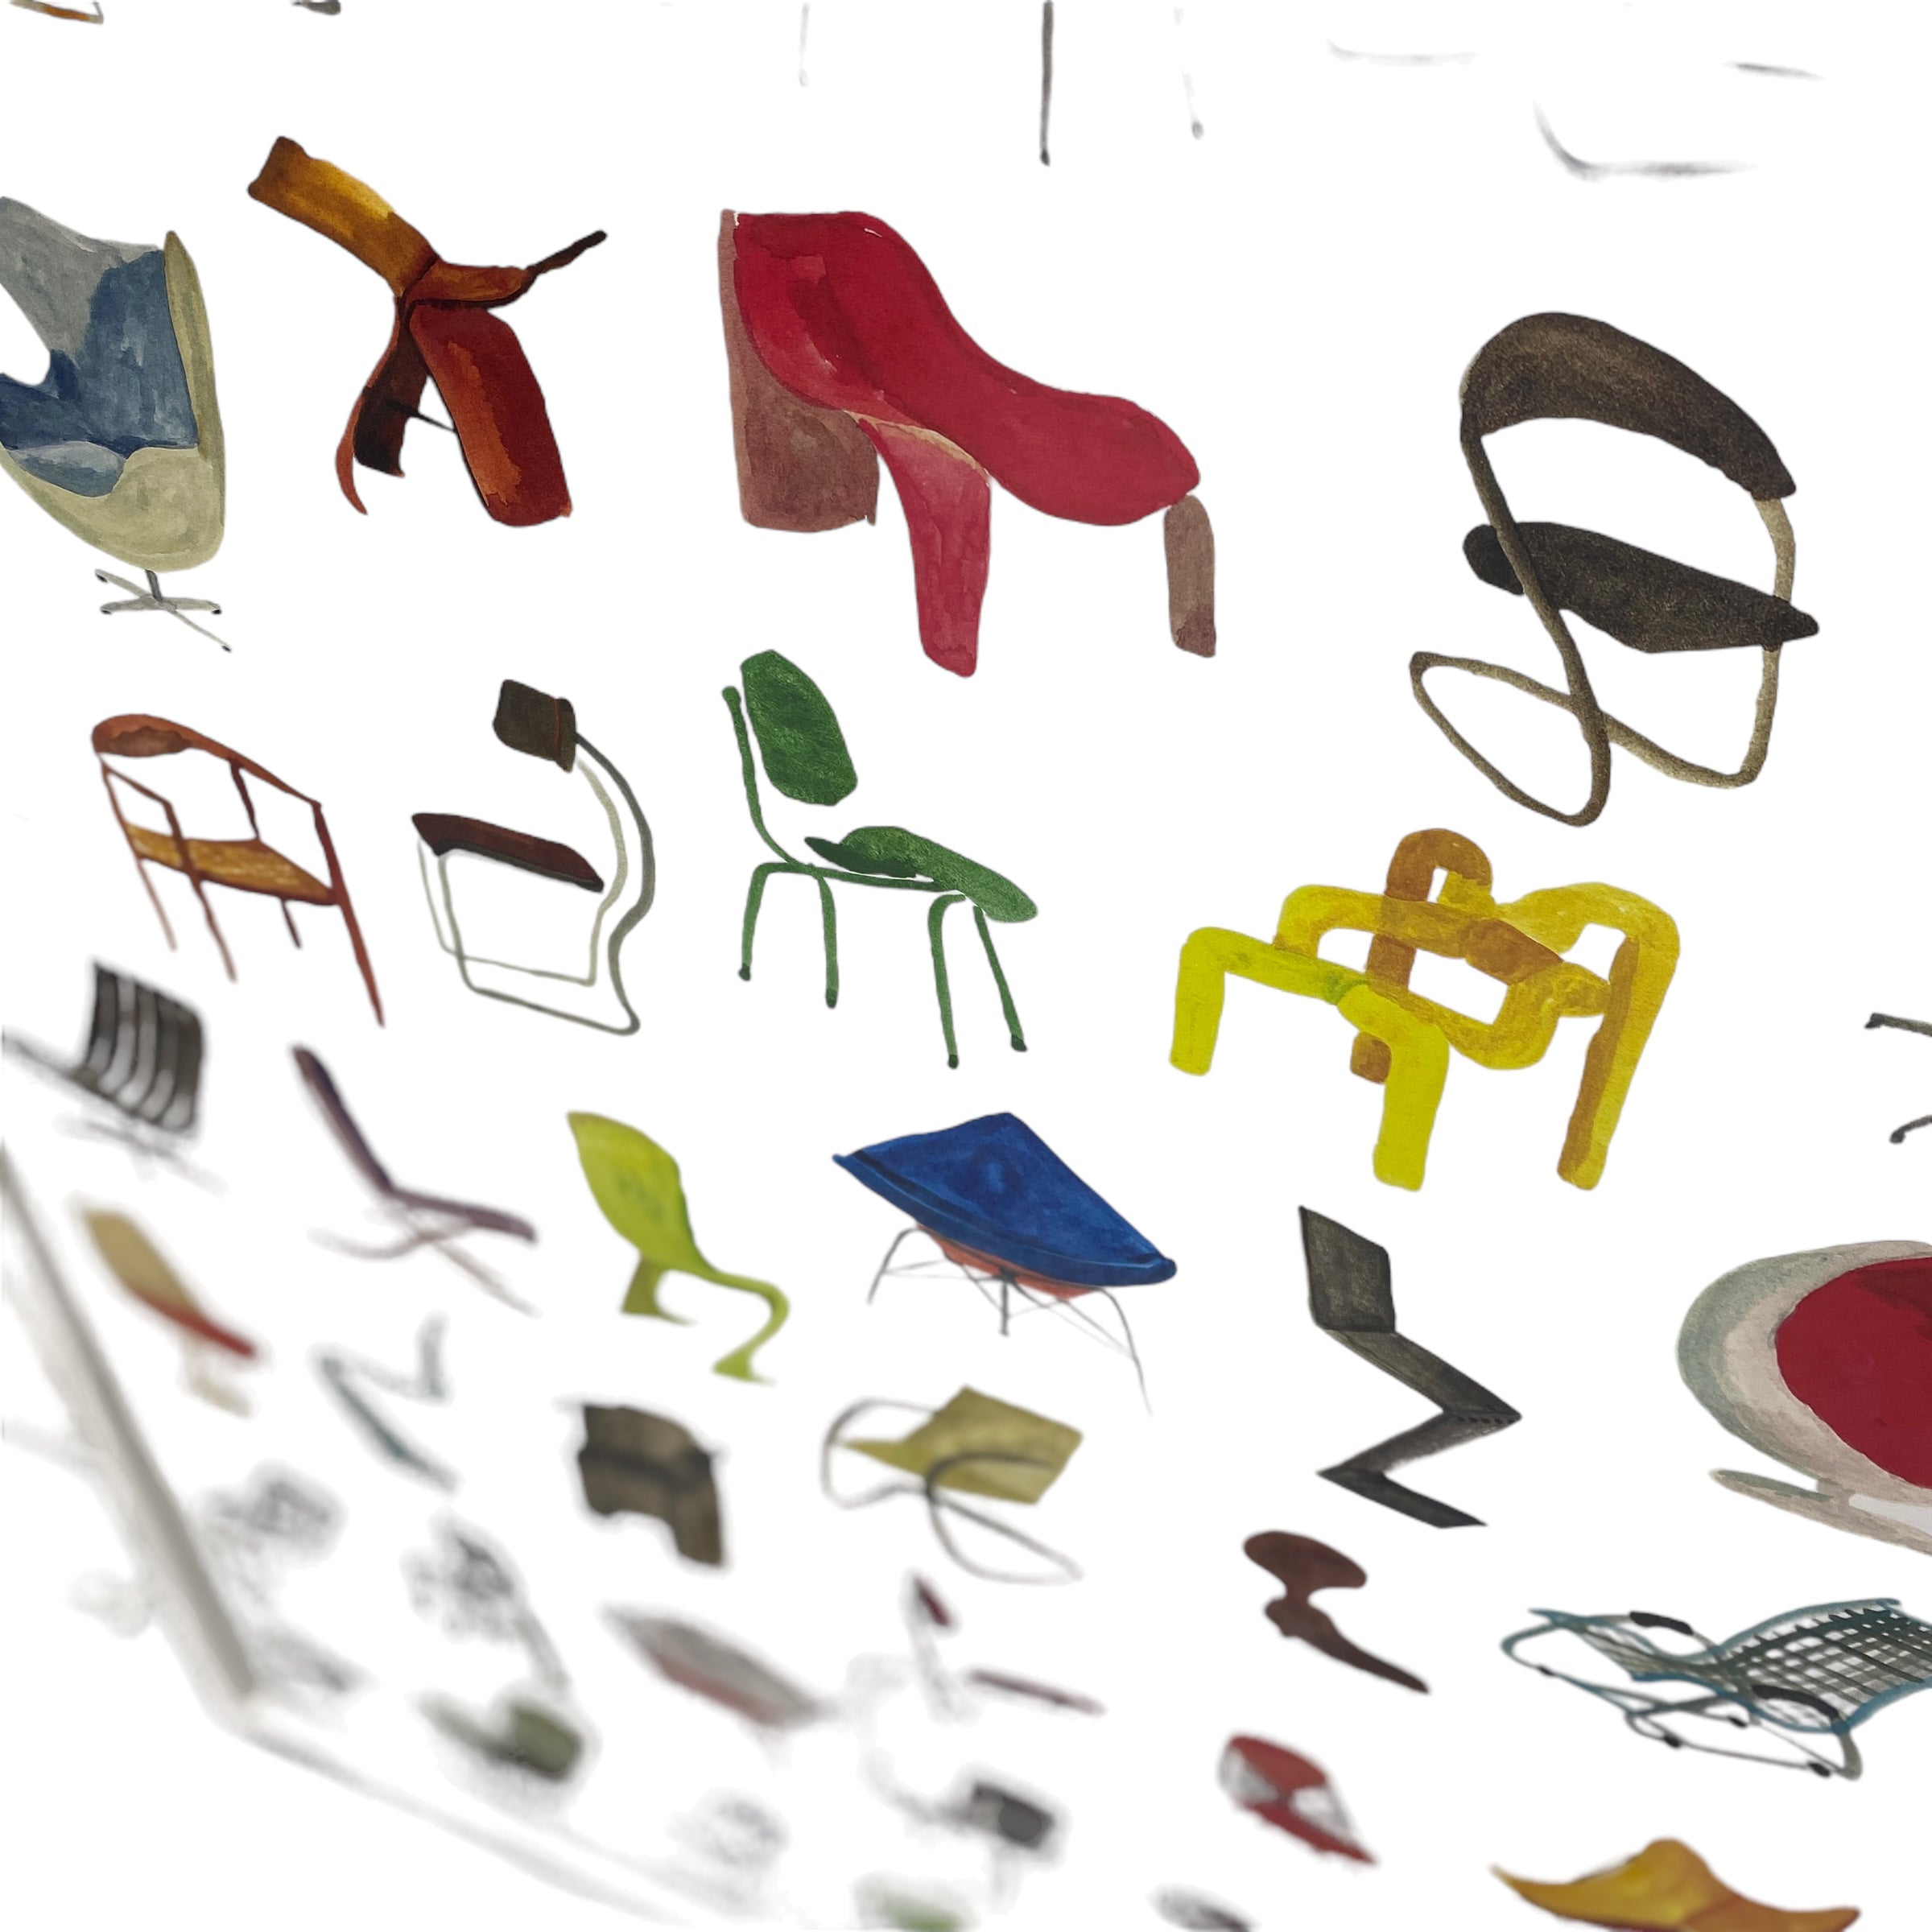 Iconic Chairs Illustration